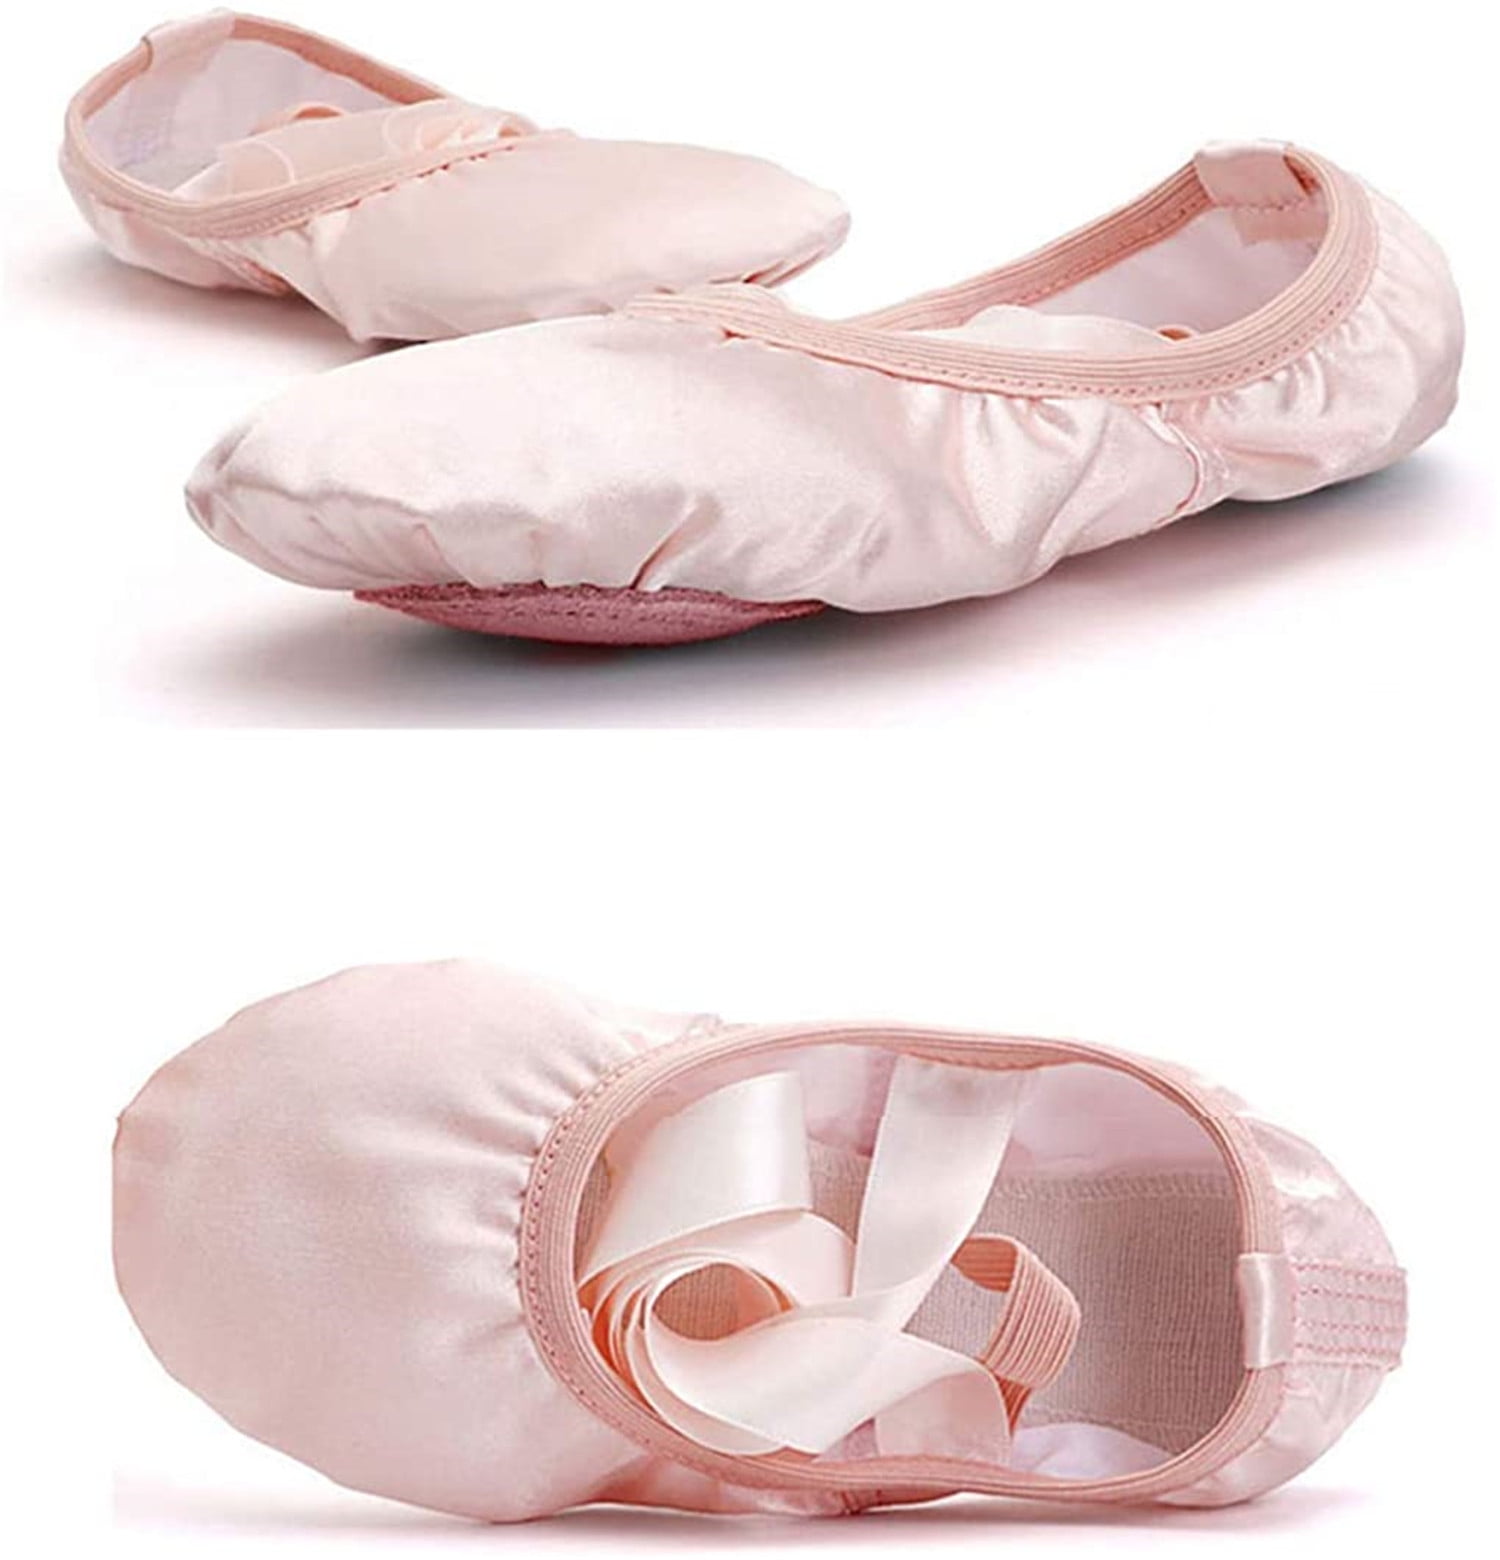 L-RUN Girls'/Women's Canvas Ballet Dance Shoes/Ballet Slipper/Yoga Shoe 